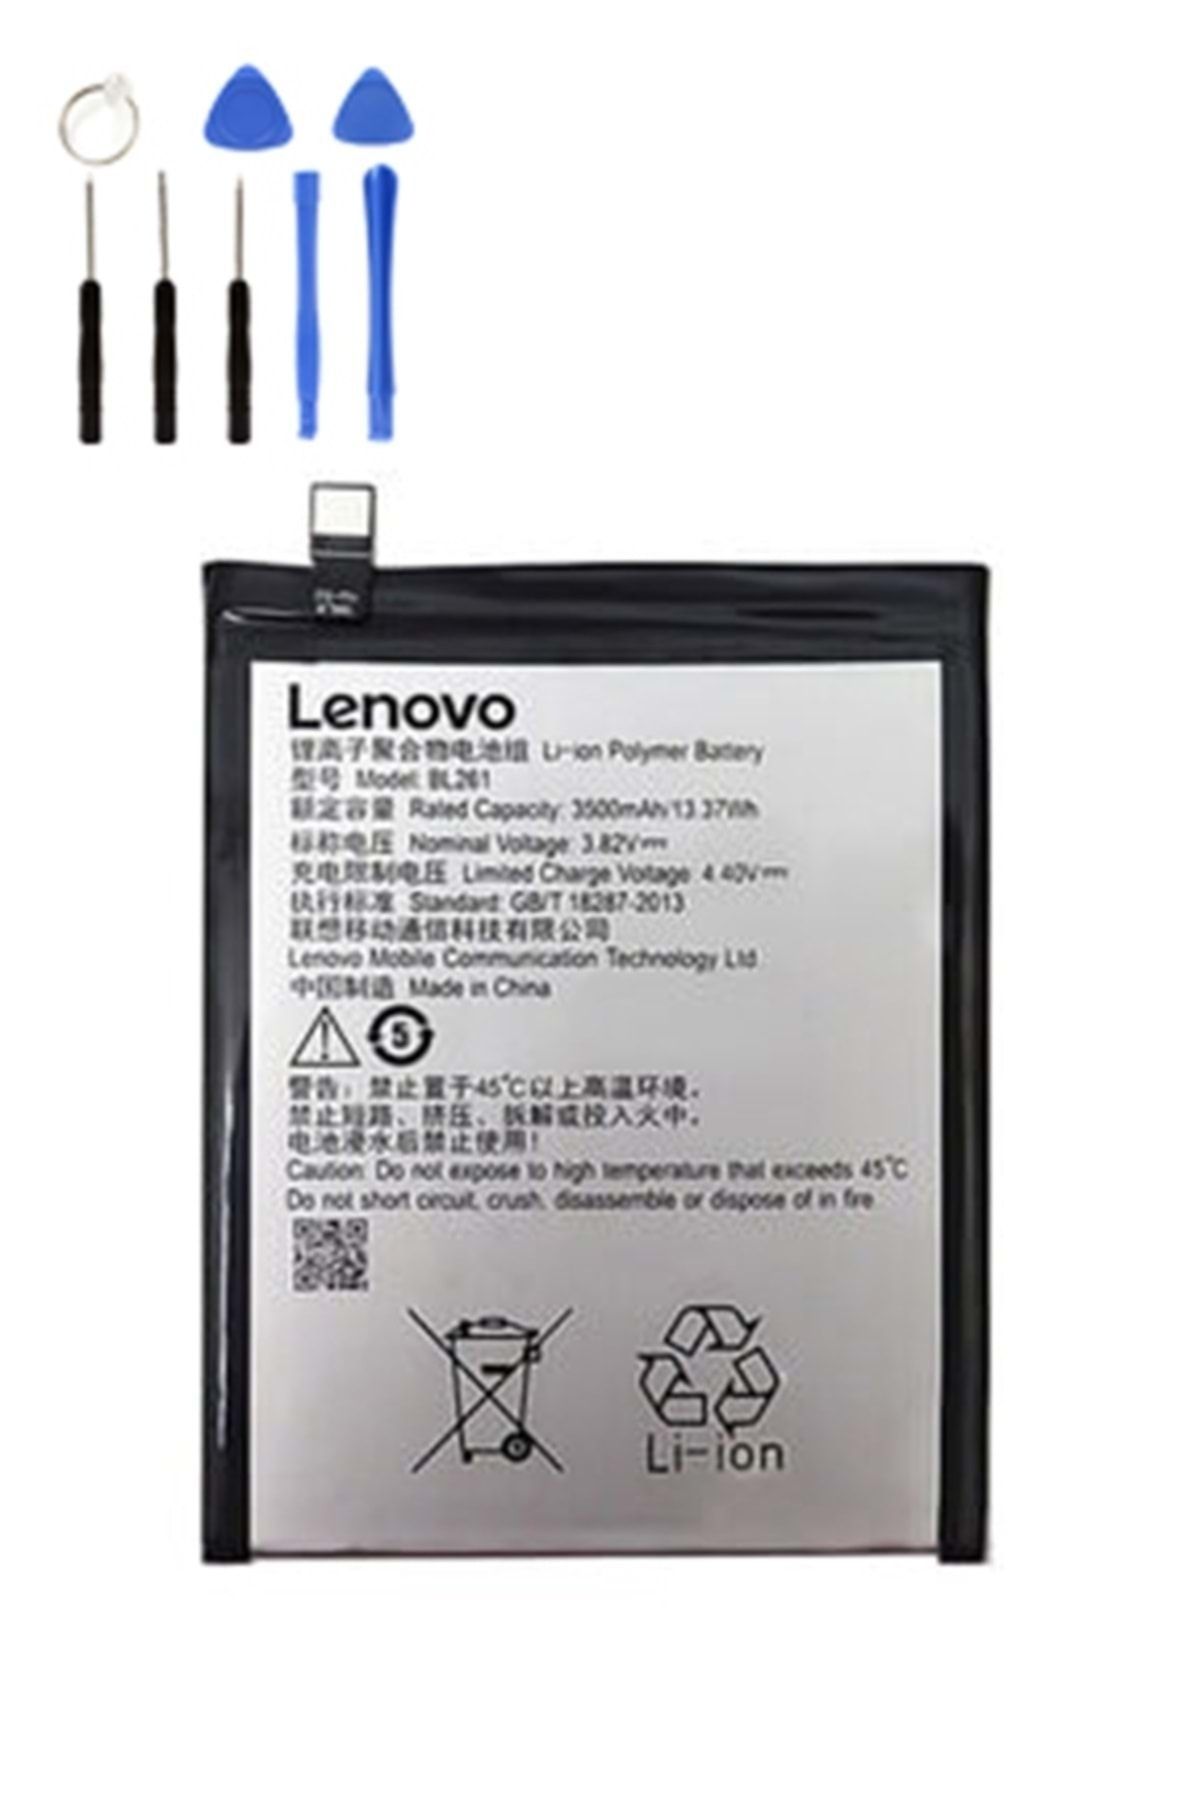 LENOVO Lenova K5 Note Batarya ve Pil Tamir Set